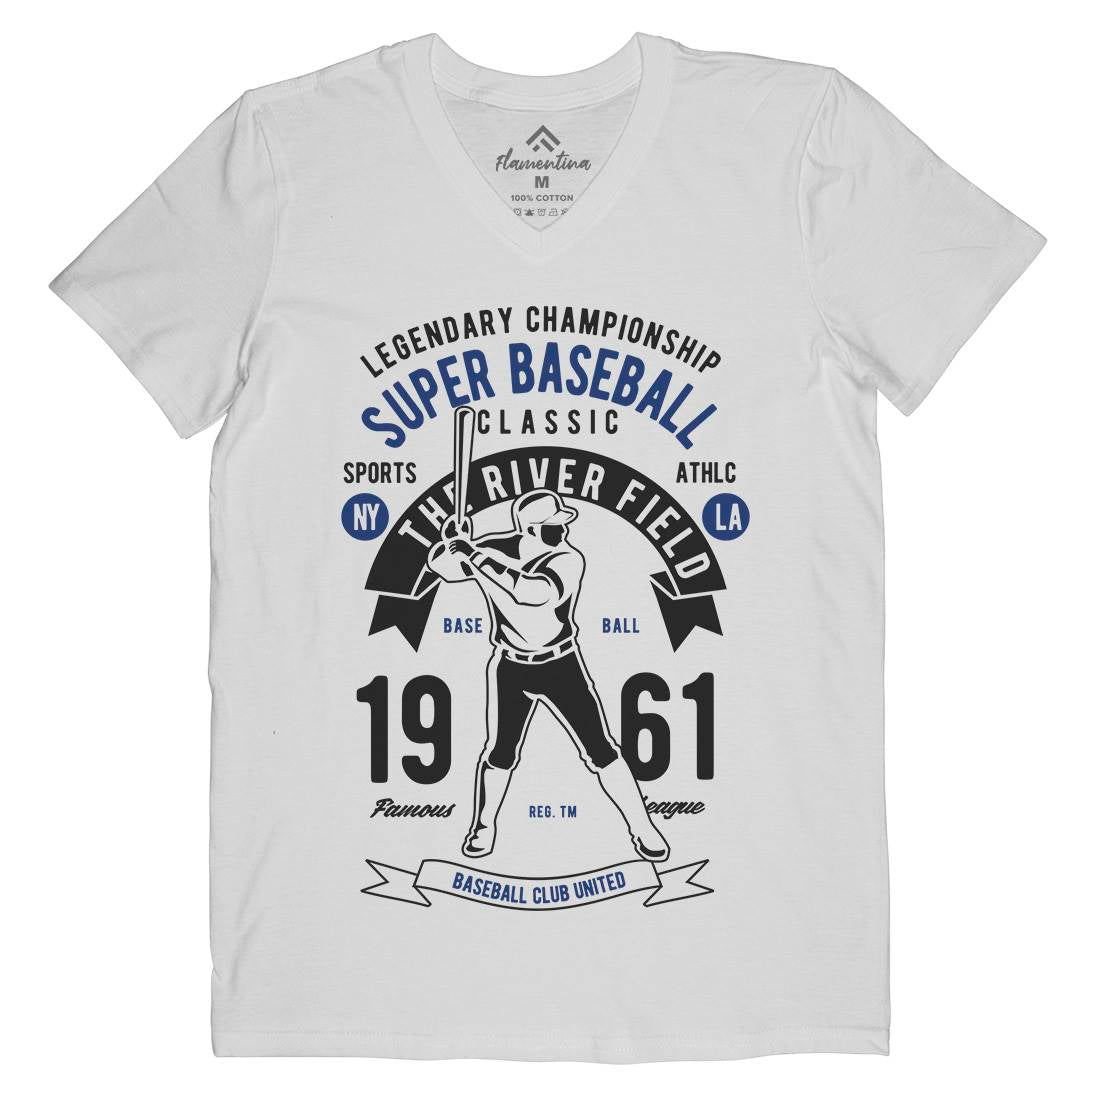 Super Baseball Mens Organic V-Neck T-Shirt Sport B455